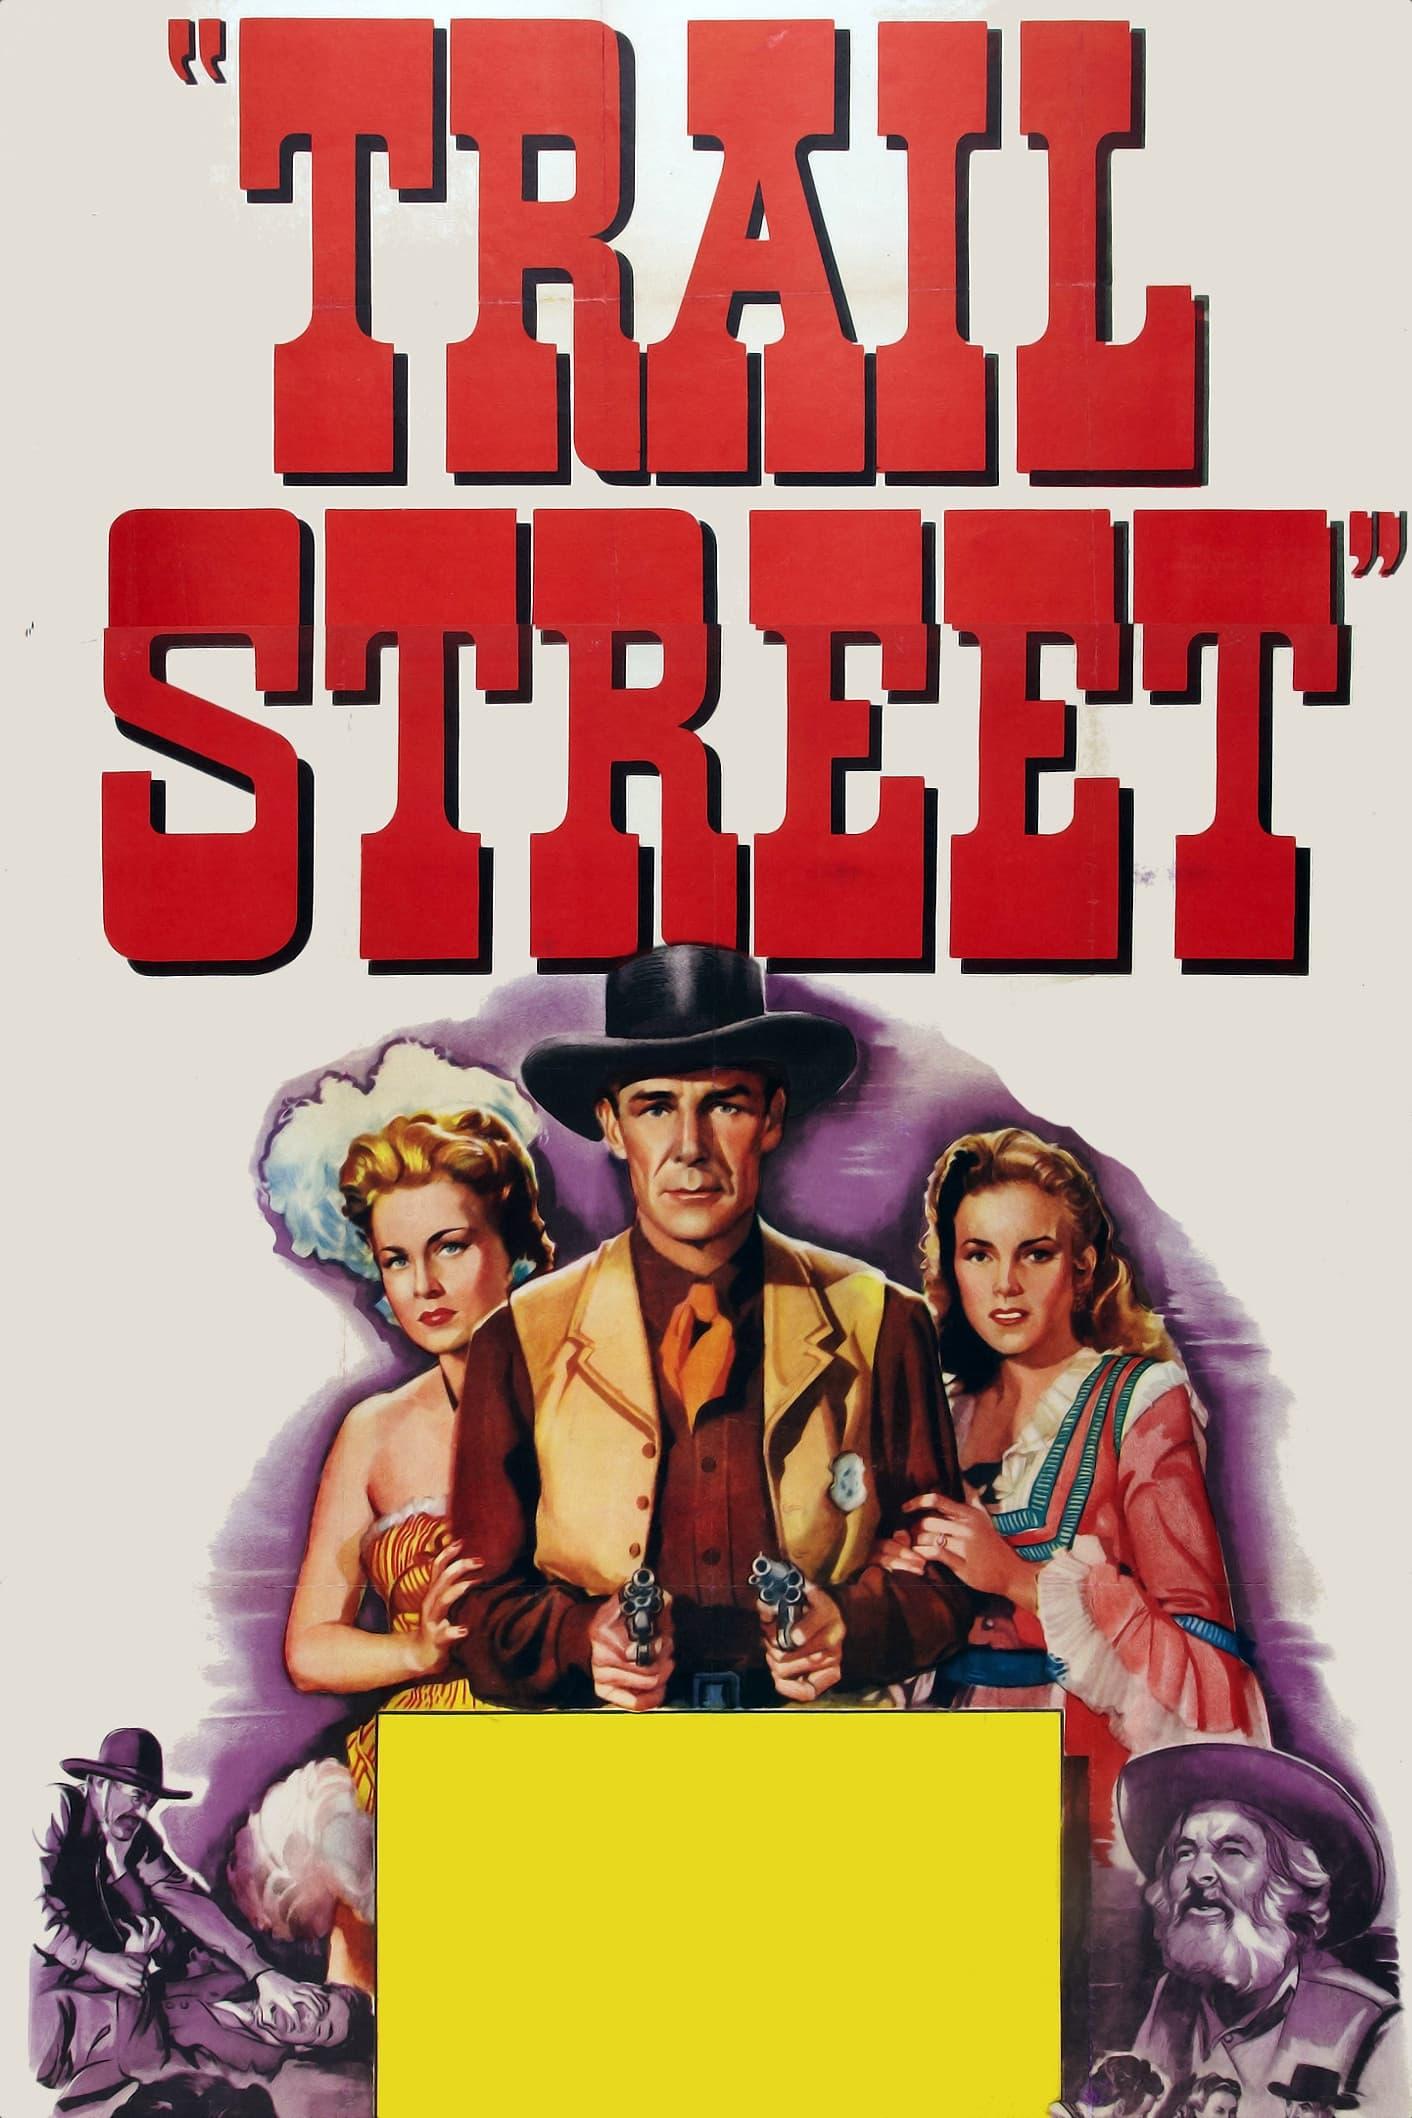 Trail Street poster